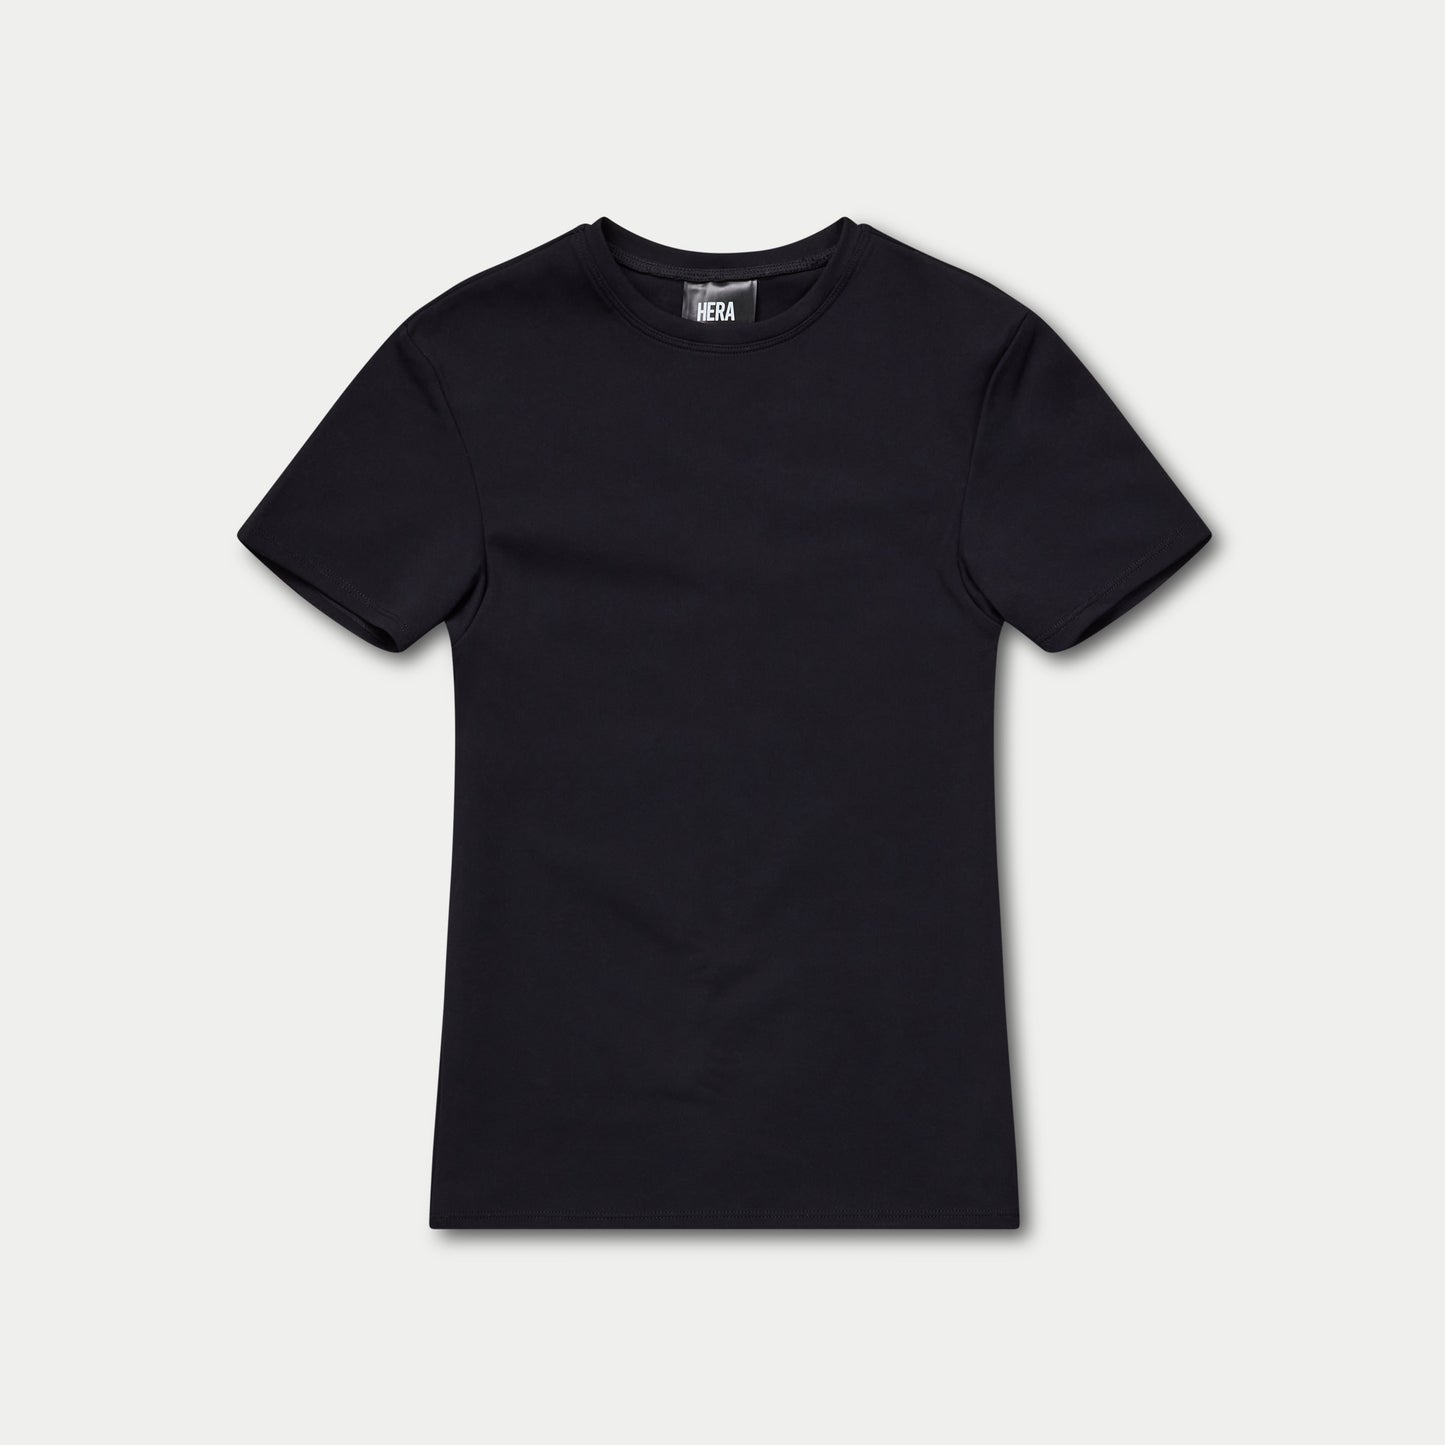 REWEAR Essential T-Shirt - Black